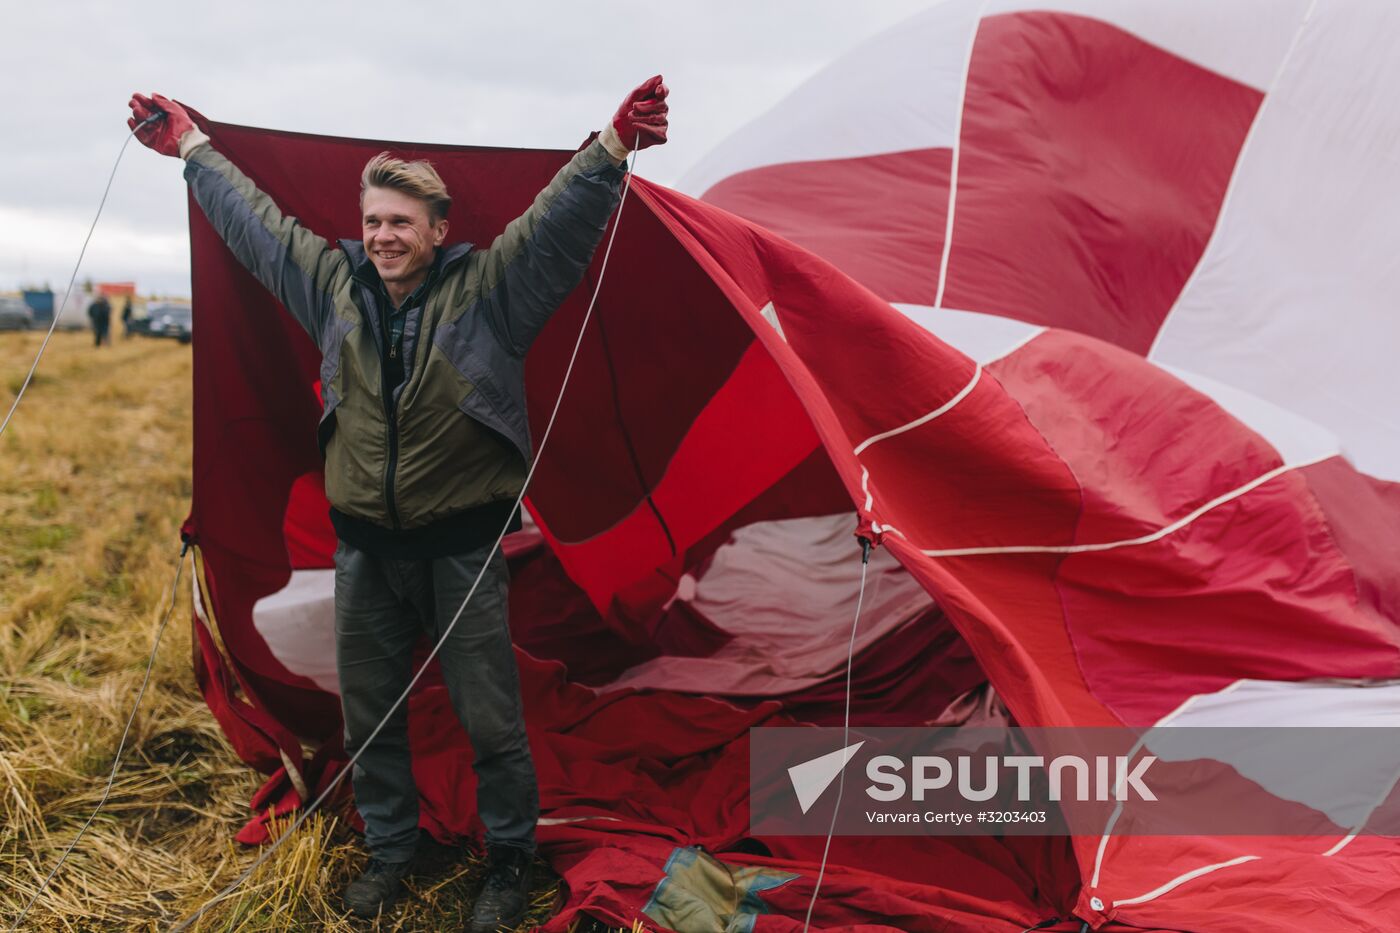 SkyFlyFest 2017 festival of air balloons in Ivanovo Region